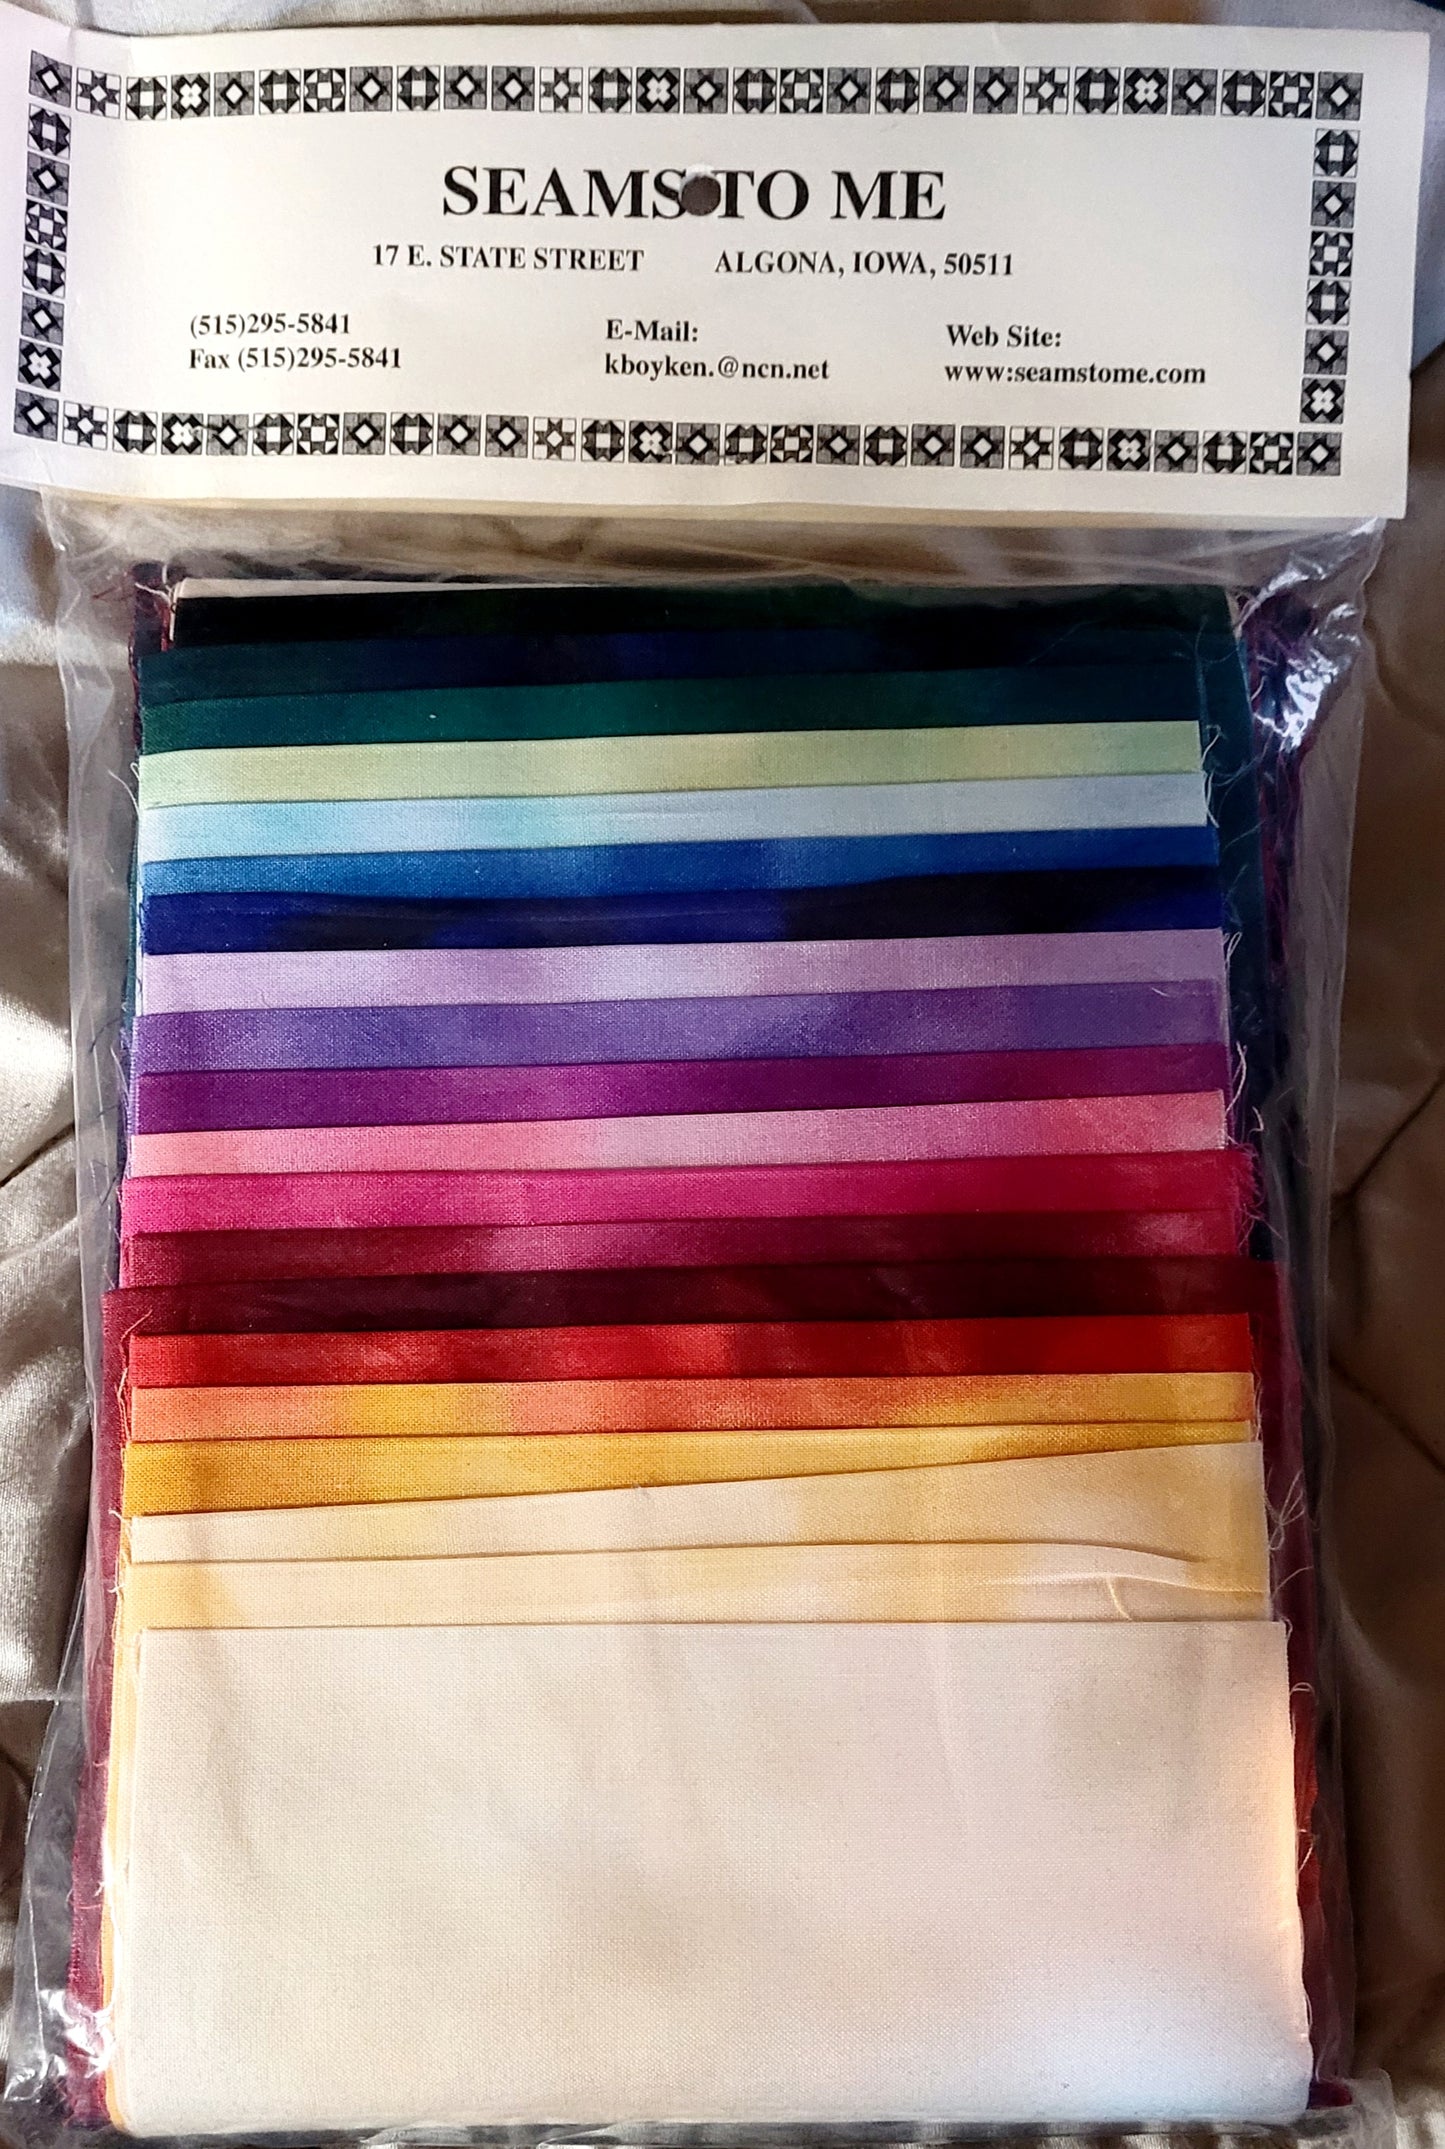 'Rainbow Twist' Quilt Pattern & Fabric (36" x 40") by Sally Ablett *NEW